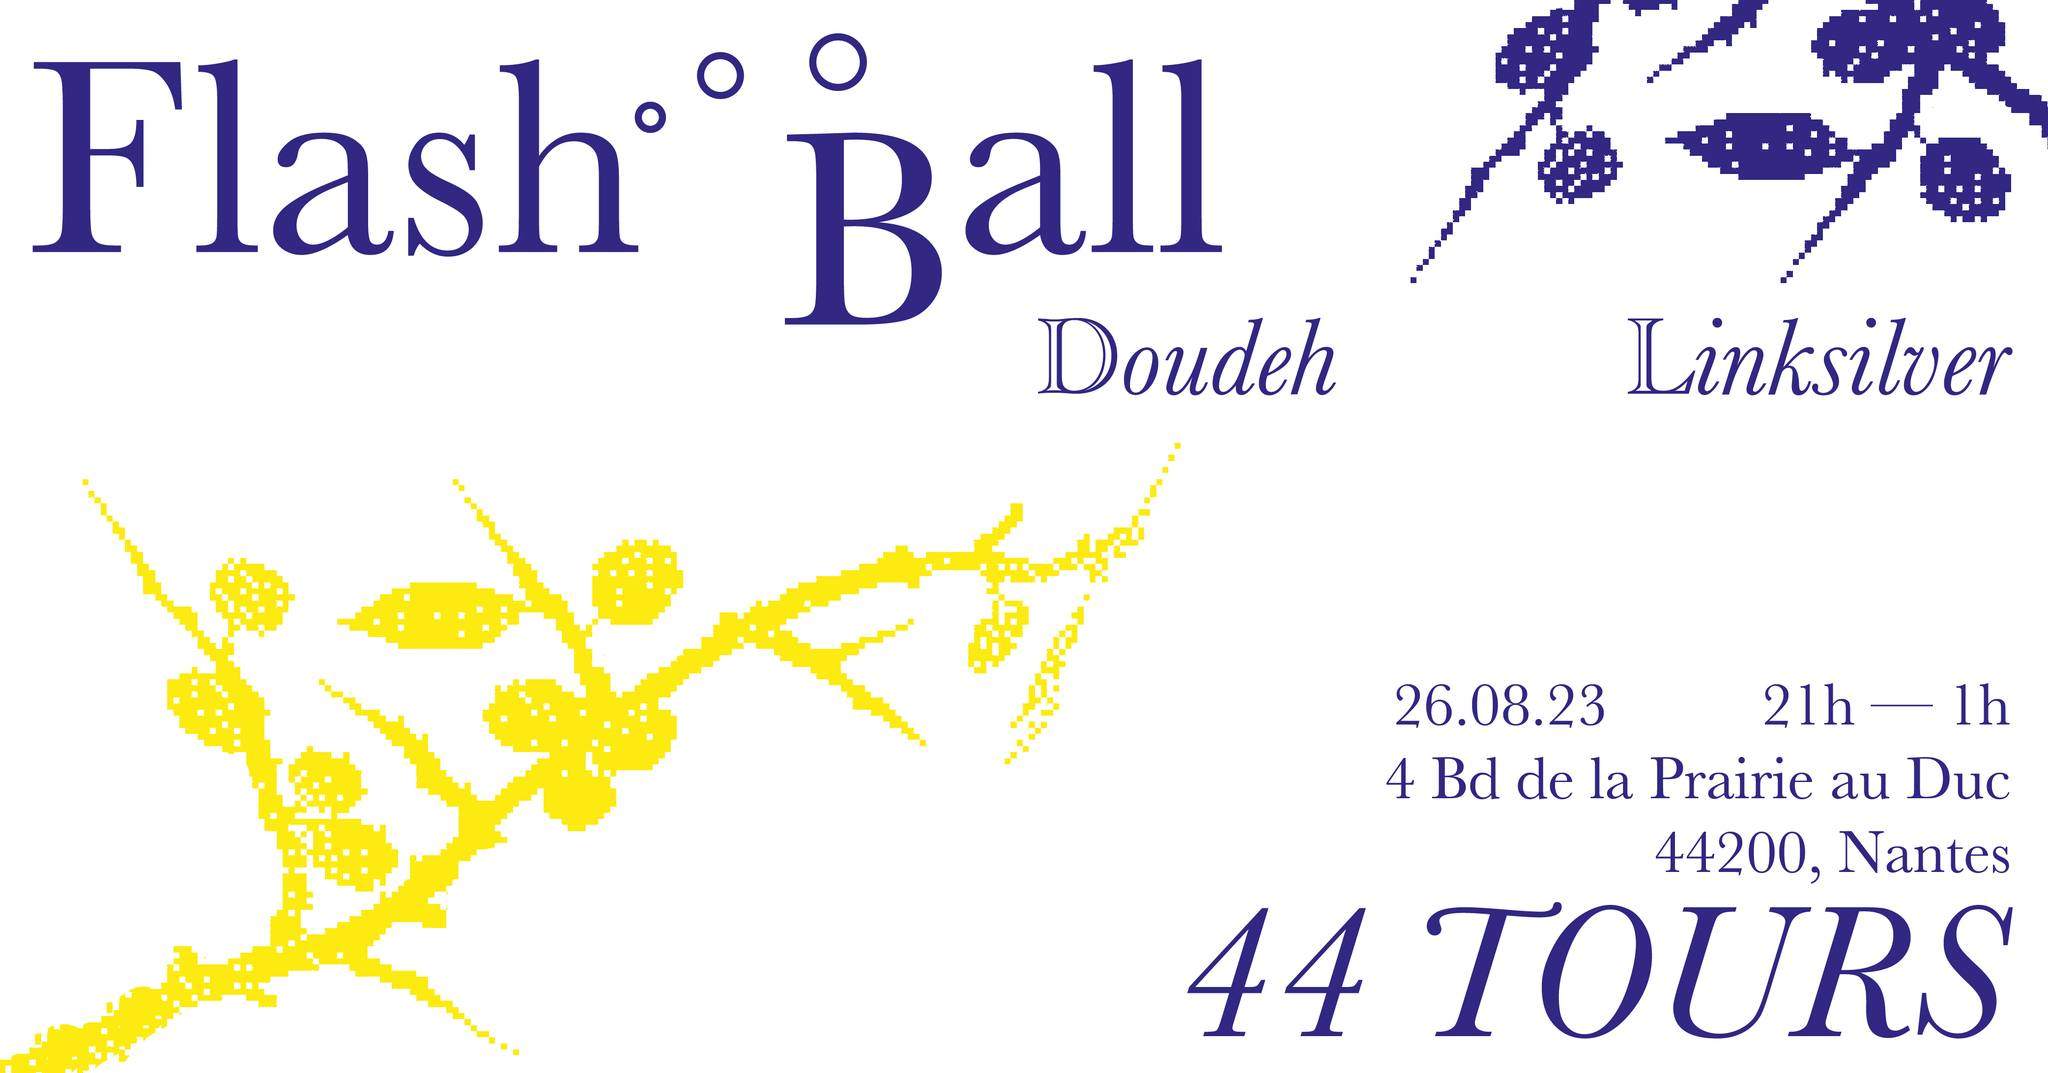 Flashball x 44 Tours - フライヤー表